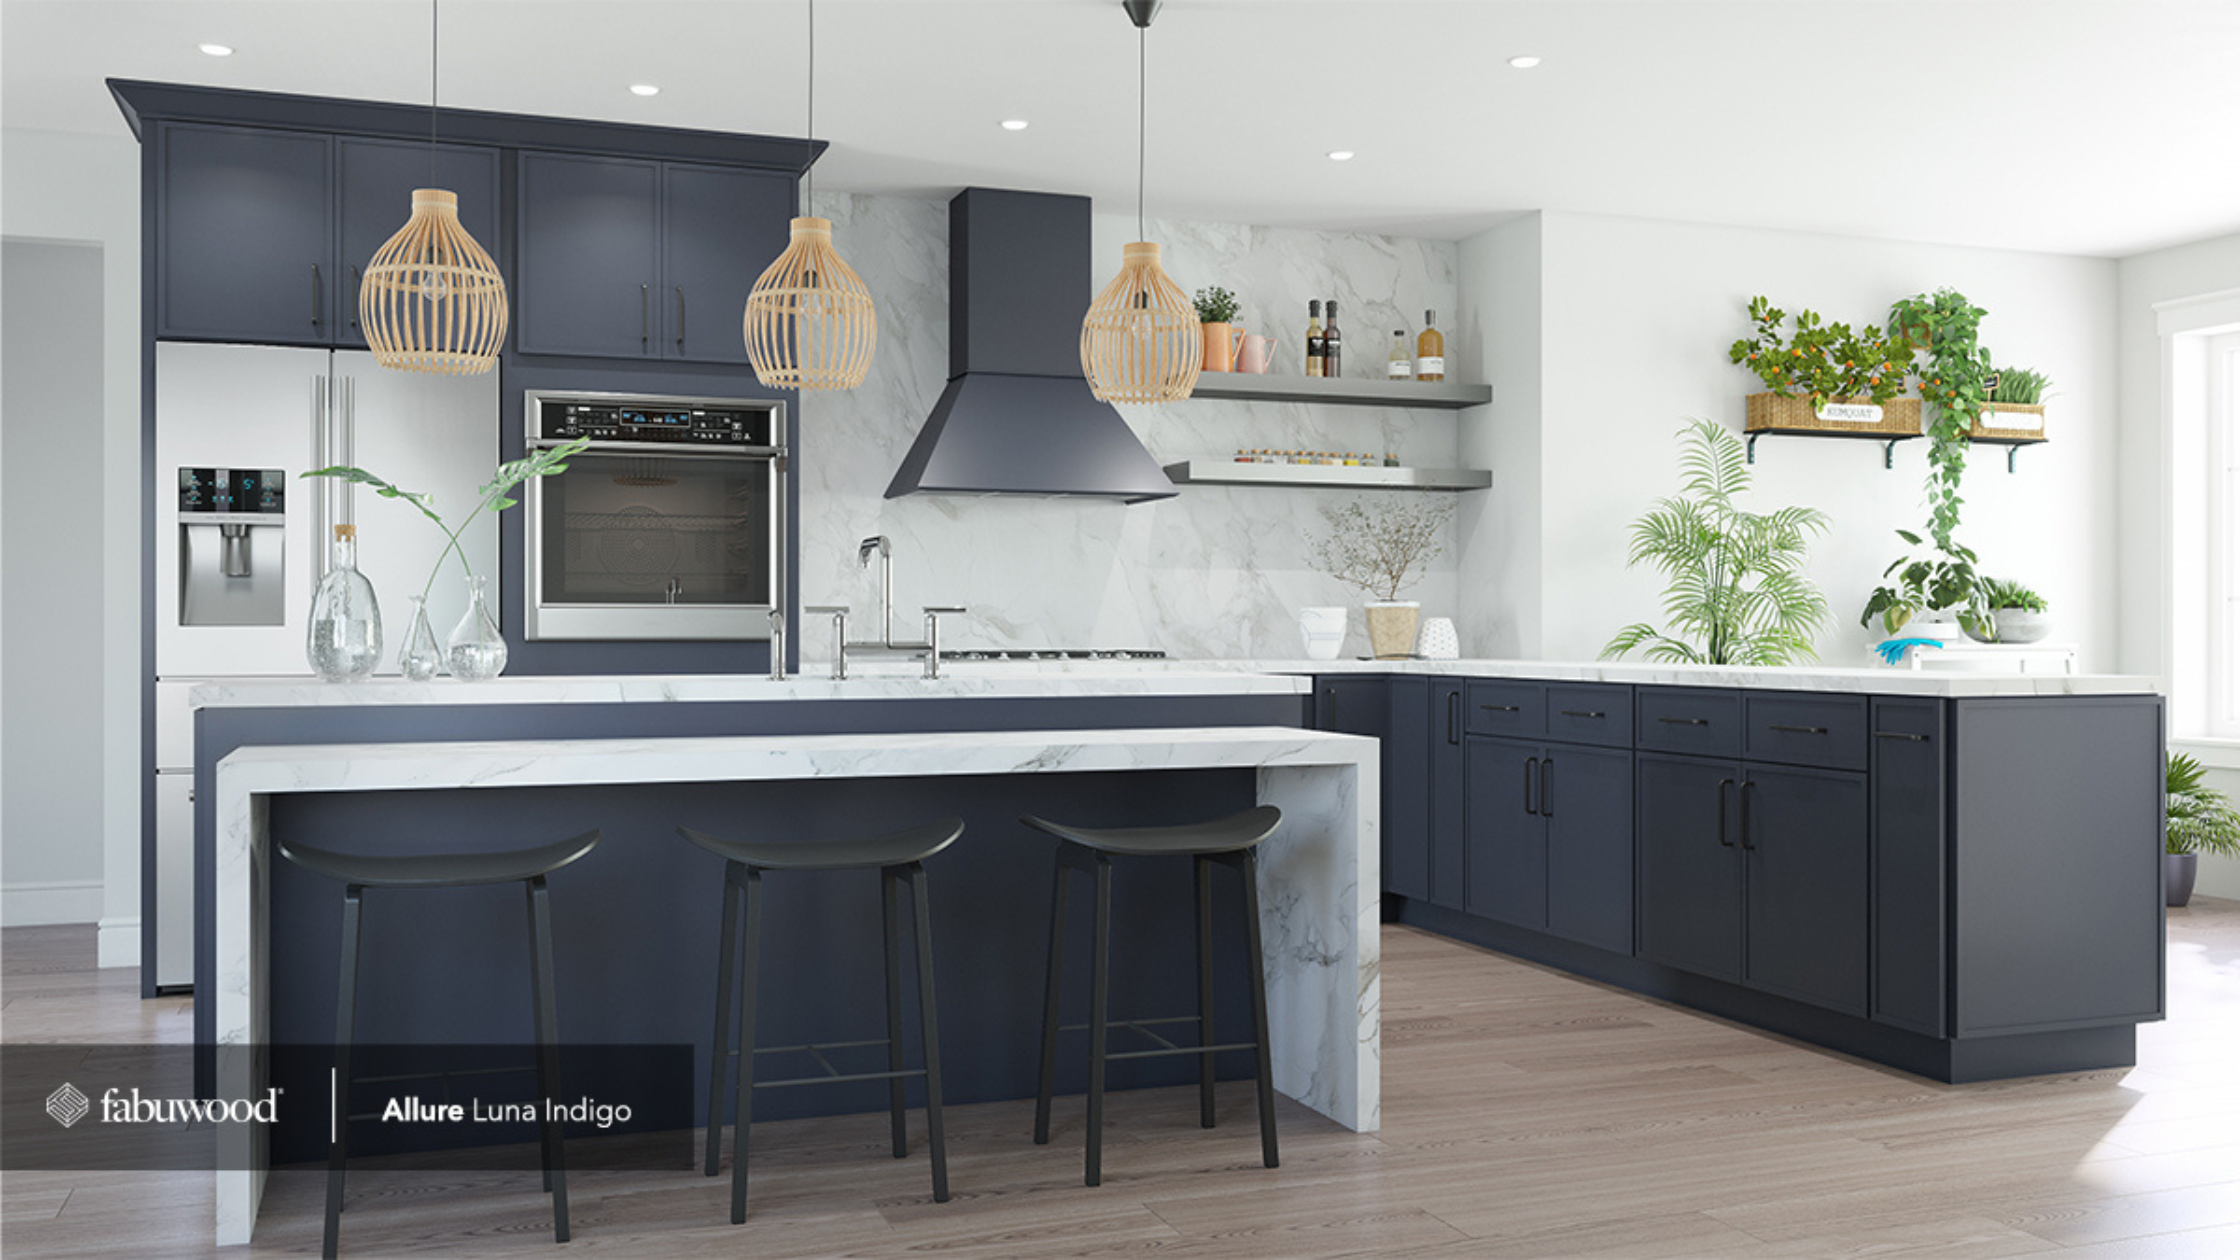 Blue Slim Shaker Kitchen. Fabuwood Allure Luna Indigo blue kitchen with island and white countertops